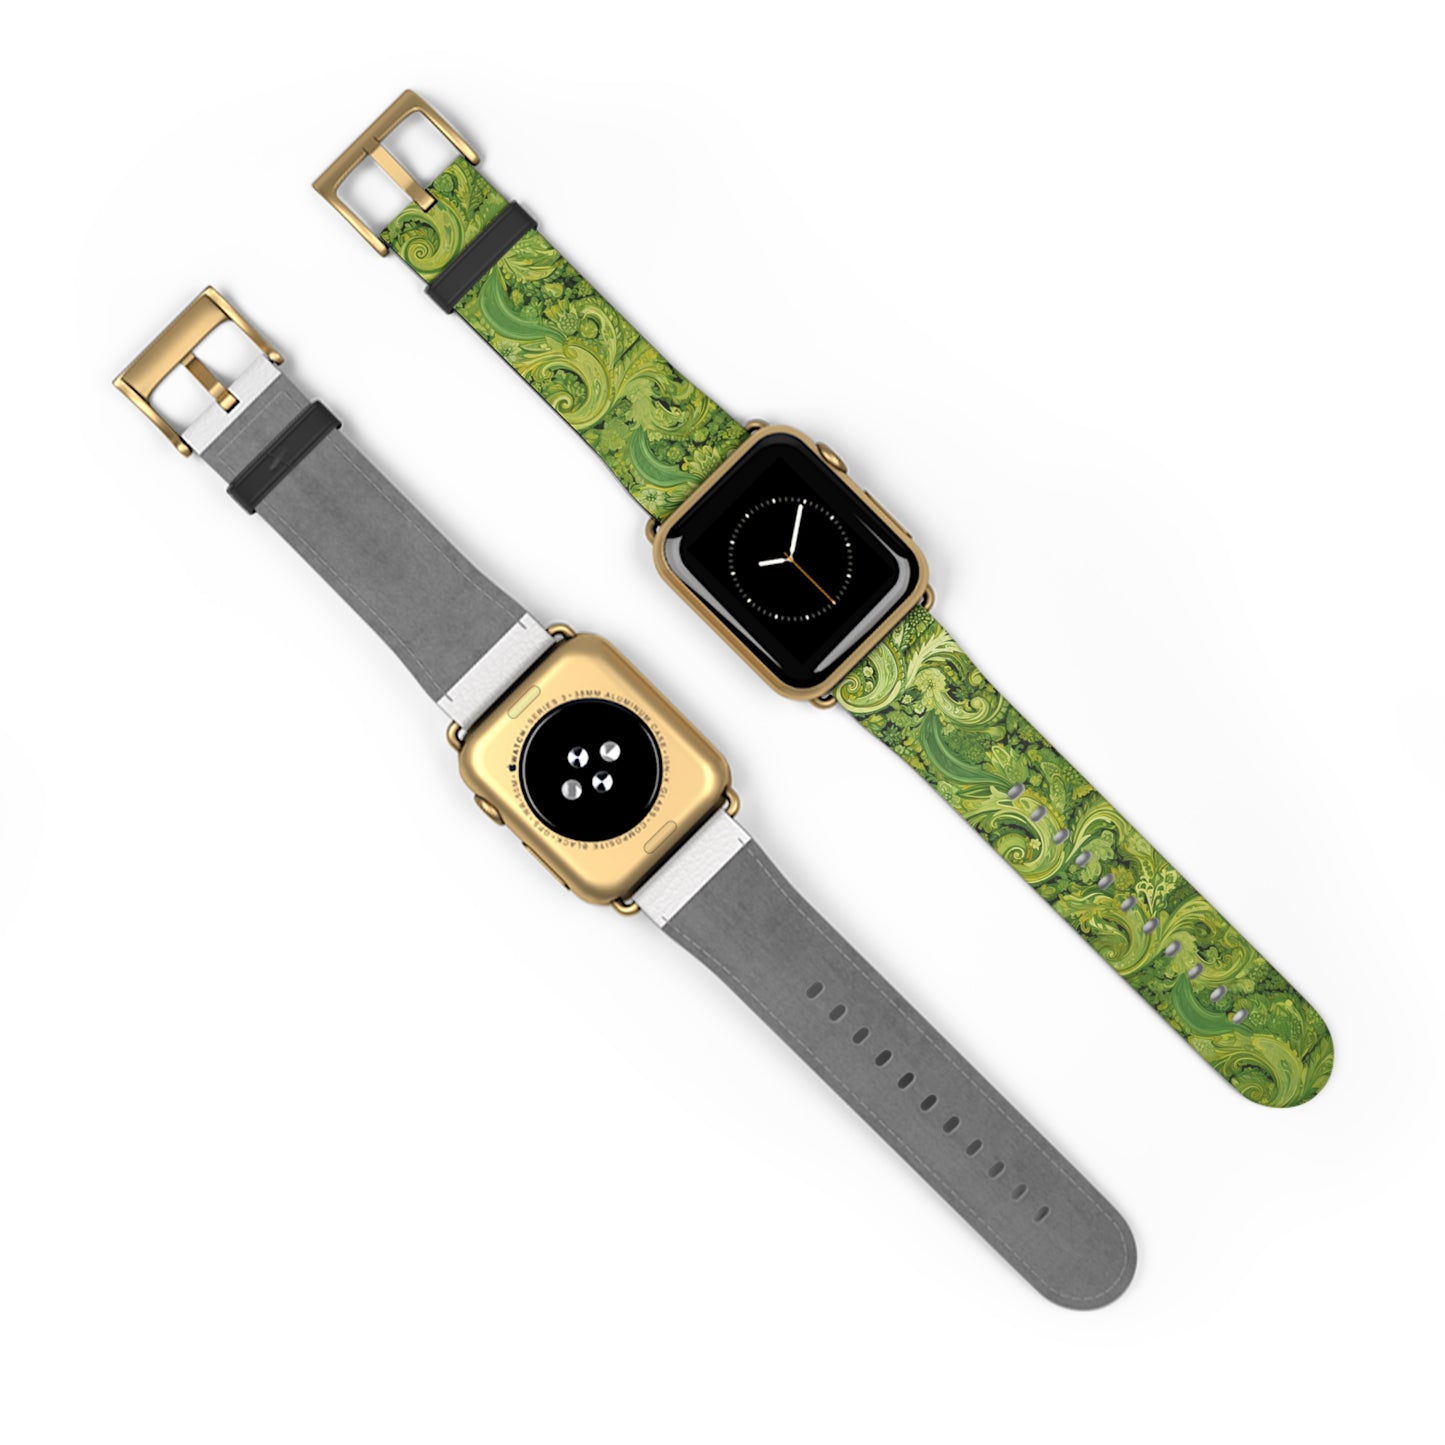 Apple Watch Strap - Pistachio Green Paisley